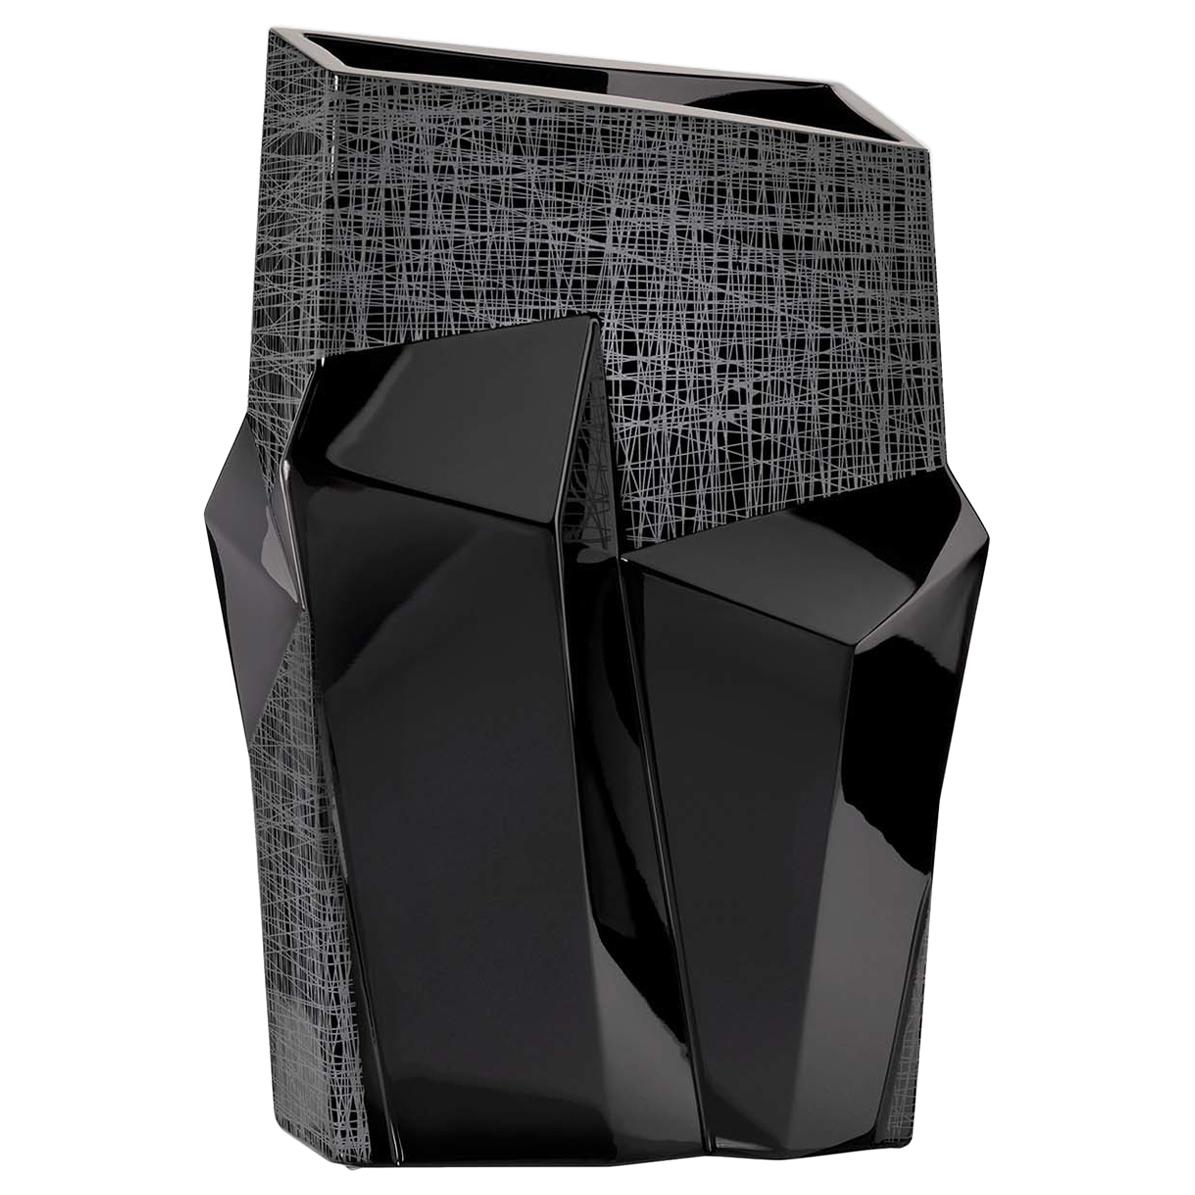 Tondo Doni Metropolis Black Vase by Mario Cioni For Sale